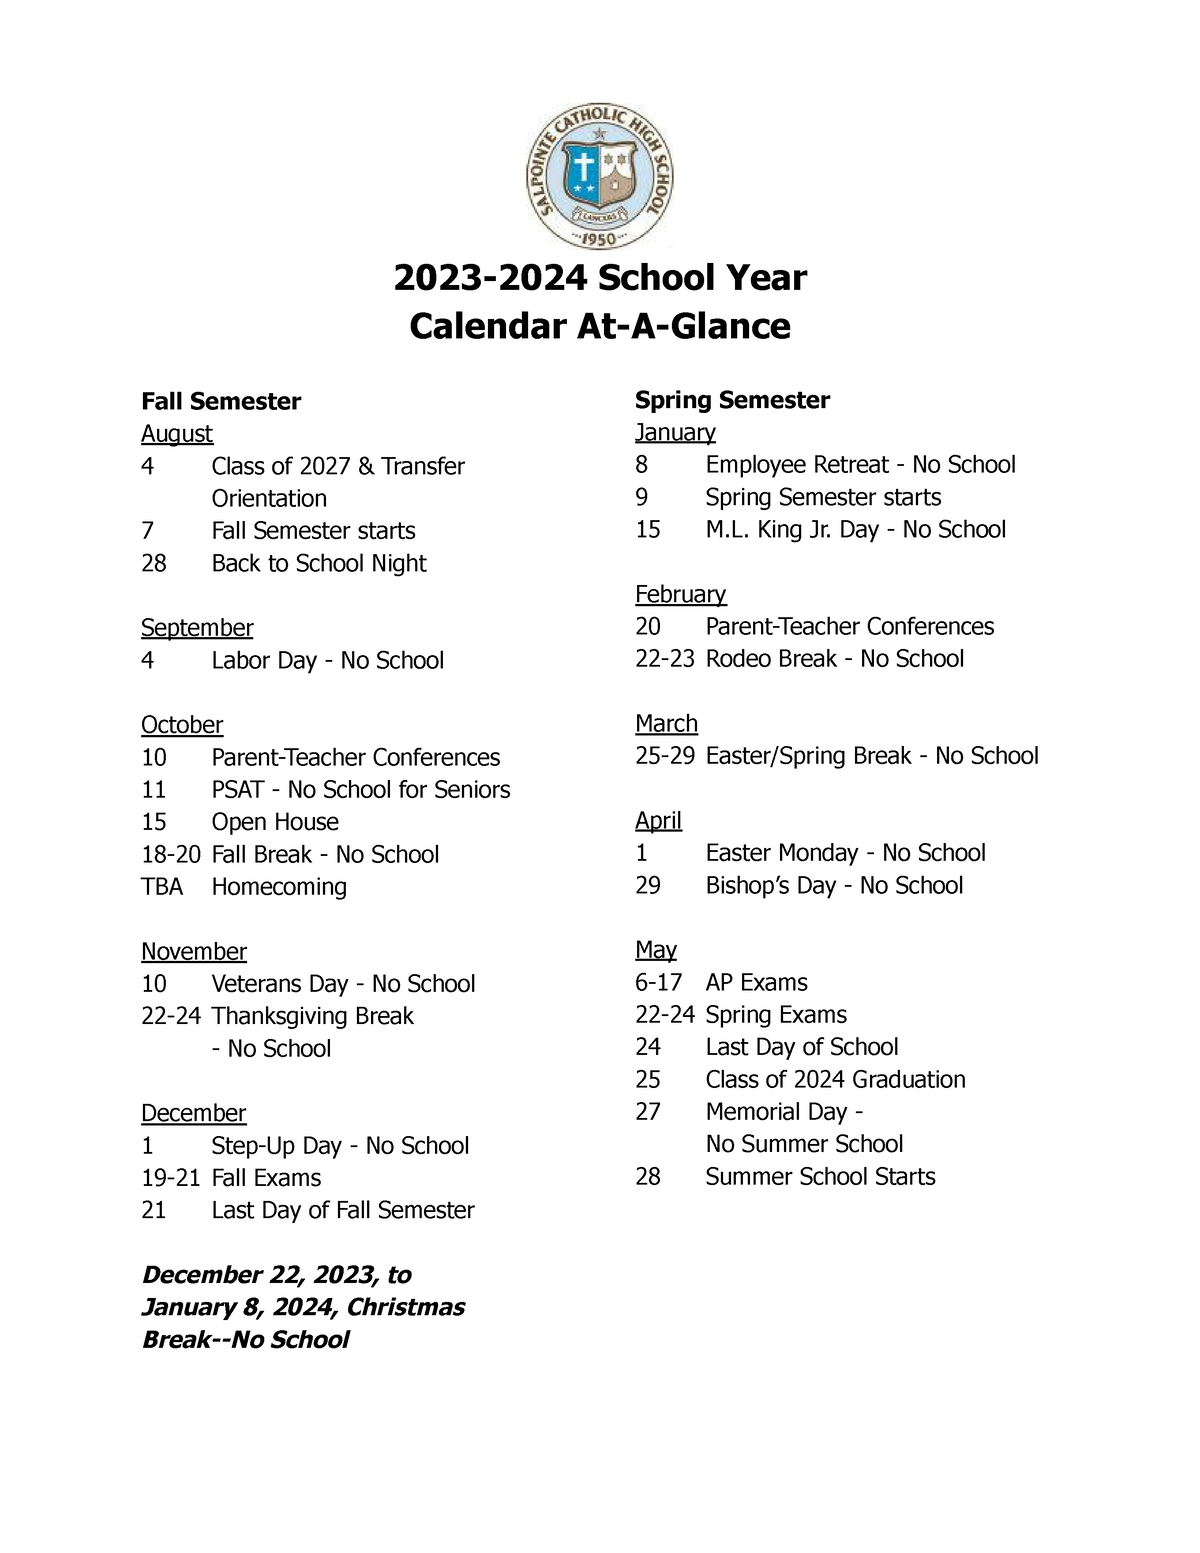 2023-2024 Calendar at a Glance - 2023-2024 School Year Calendar At-A ...